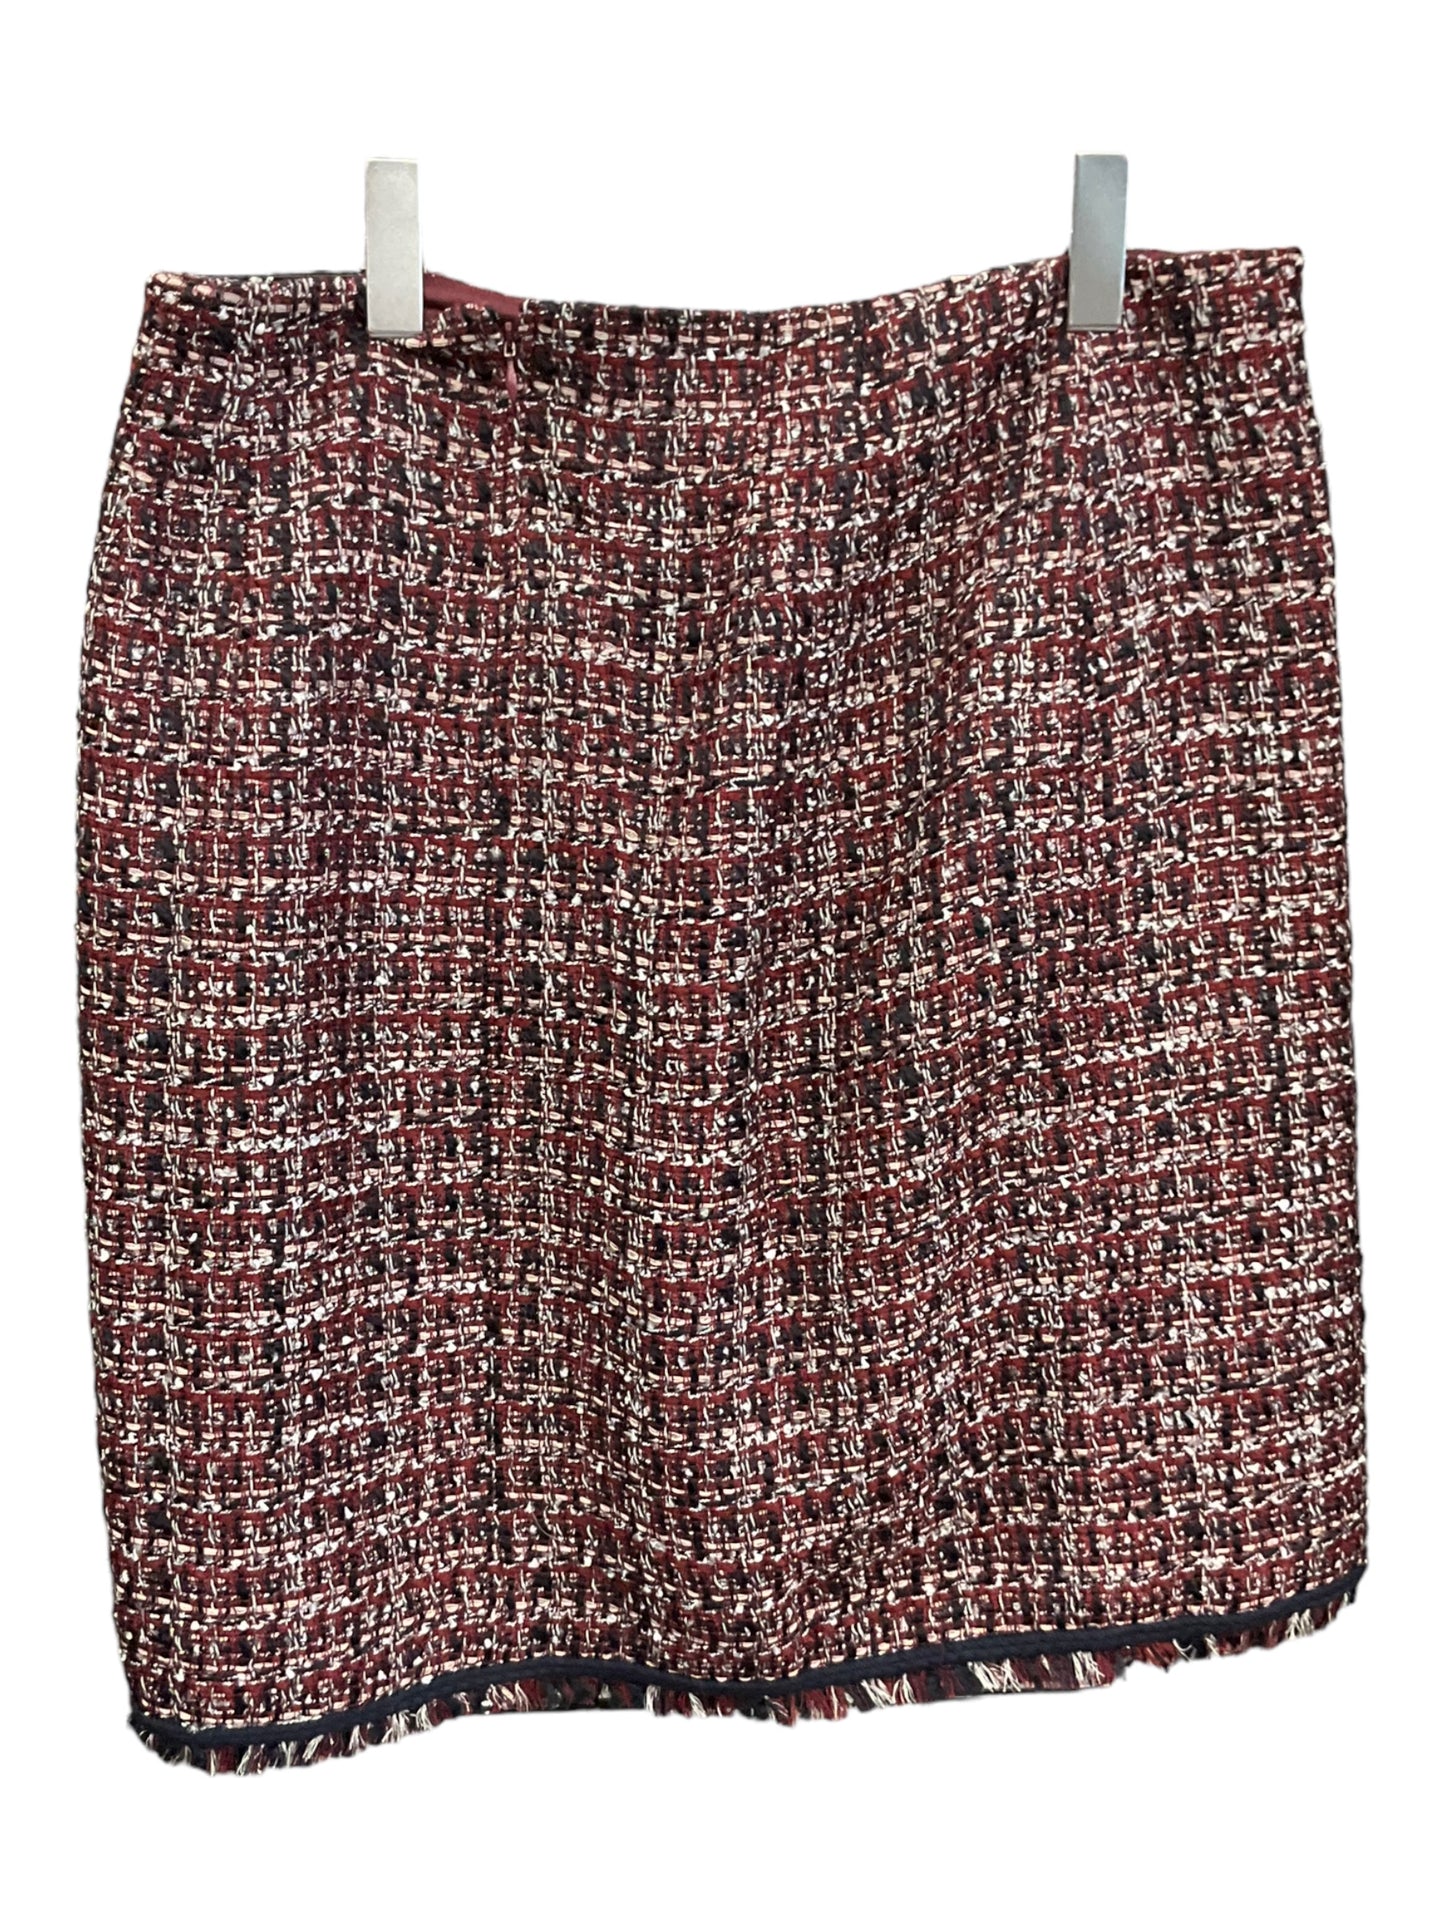 Skirt Midi By Talbots  Size: Petite   Xl